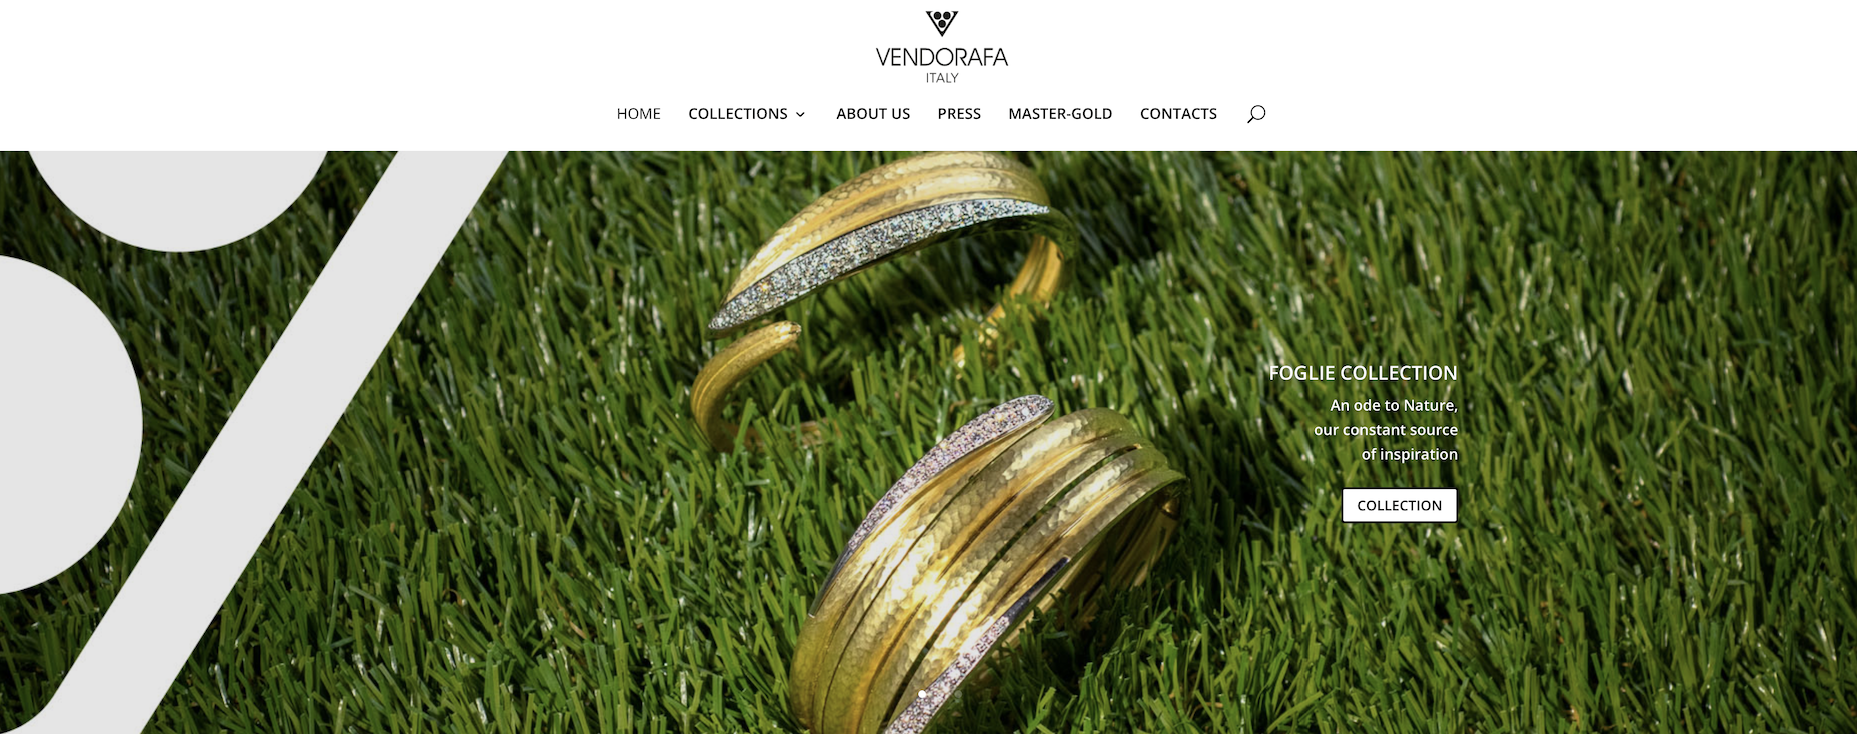 Gismondi 1754 Acquires the Jewelry Brand Vendorafa From LVMH for 610,000 Euros